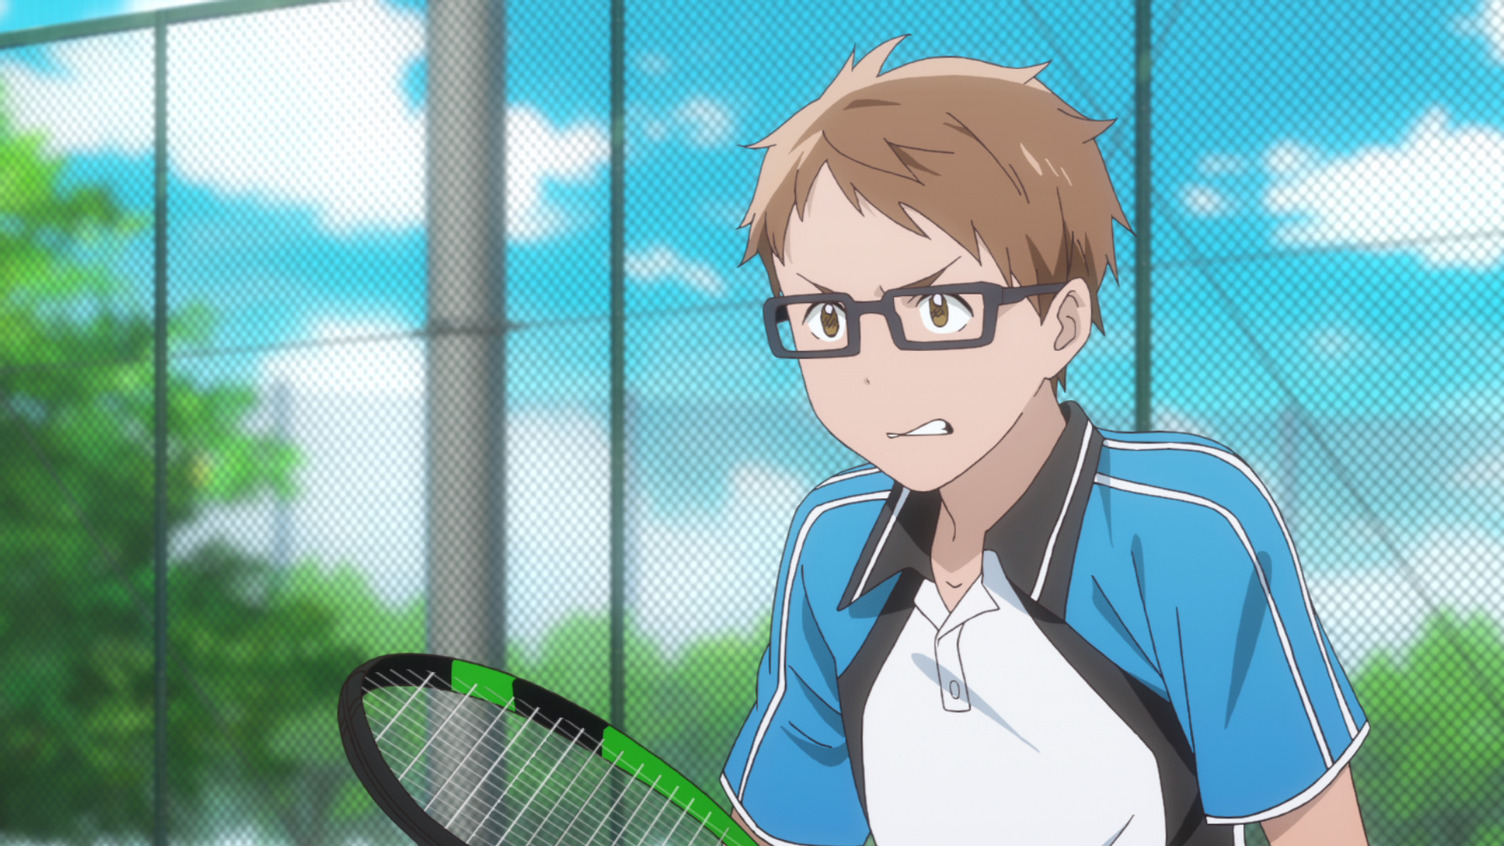 Sofuteni Tennis Comedy Manga Gets TV Anime  News  Anime News Network